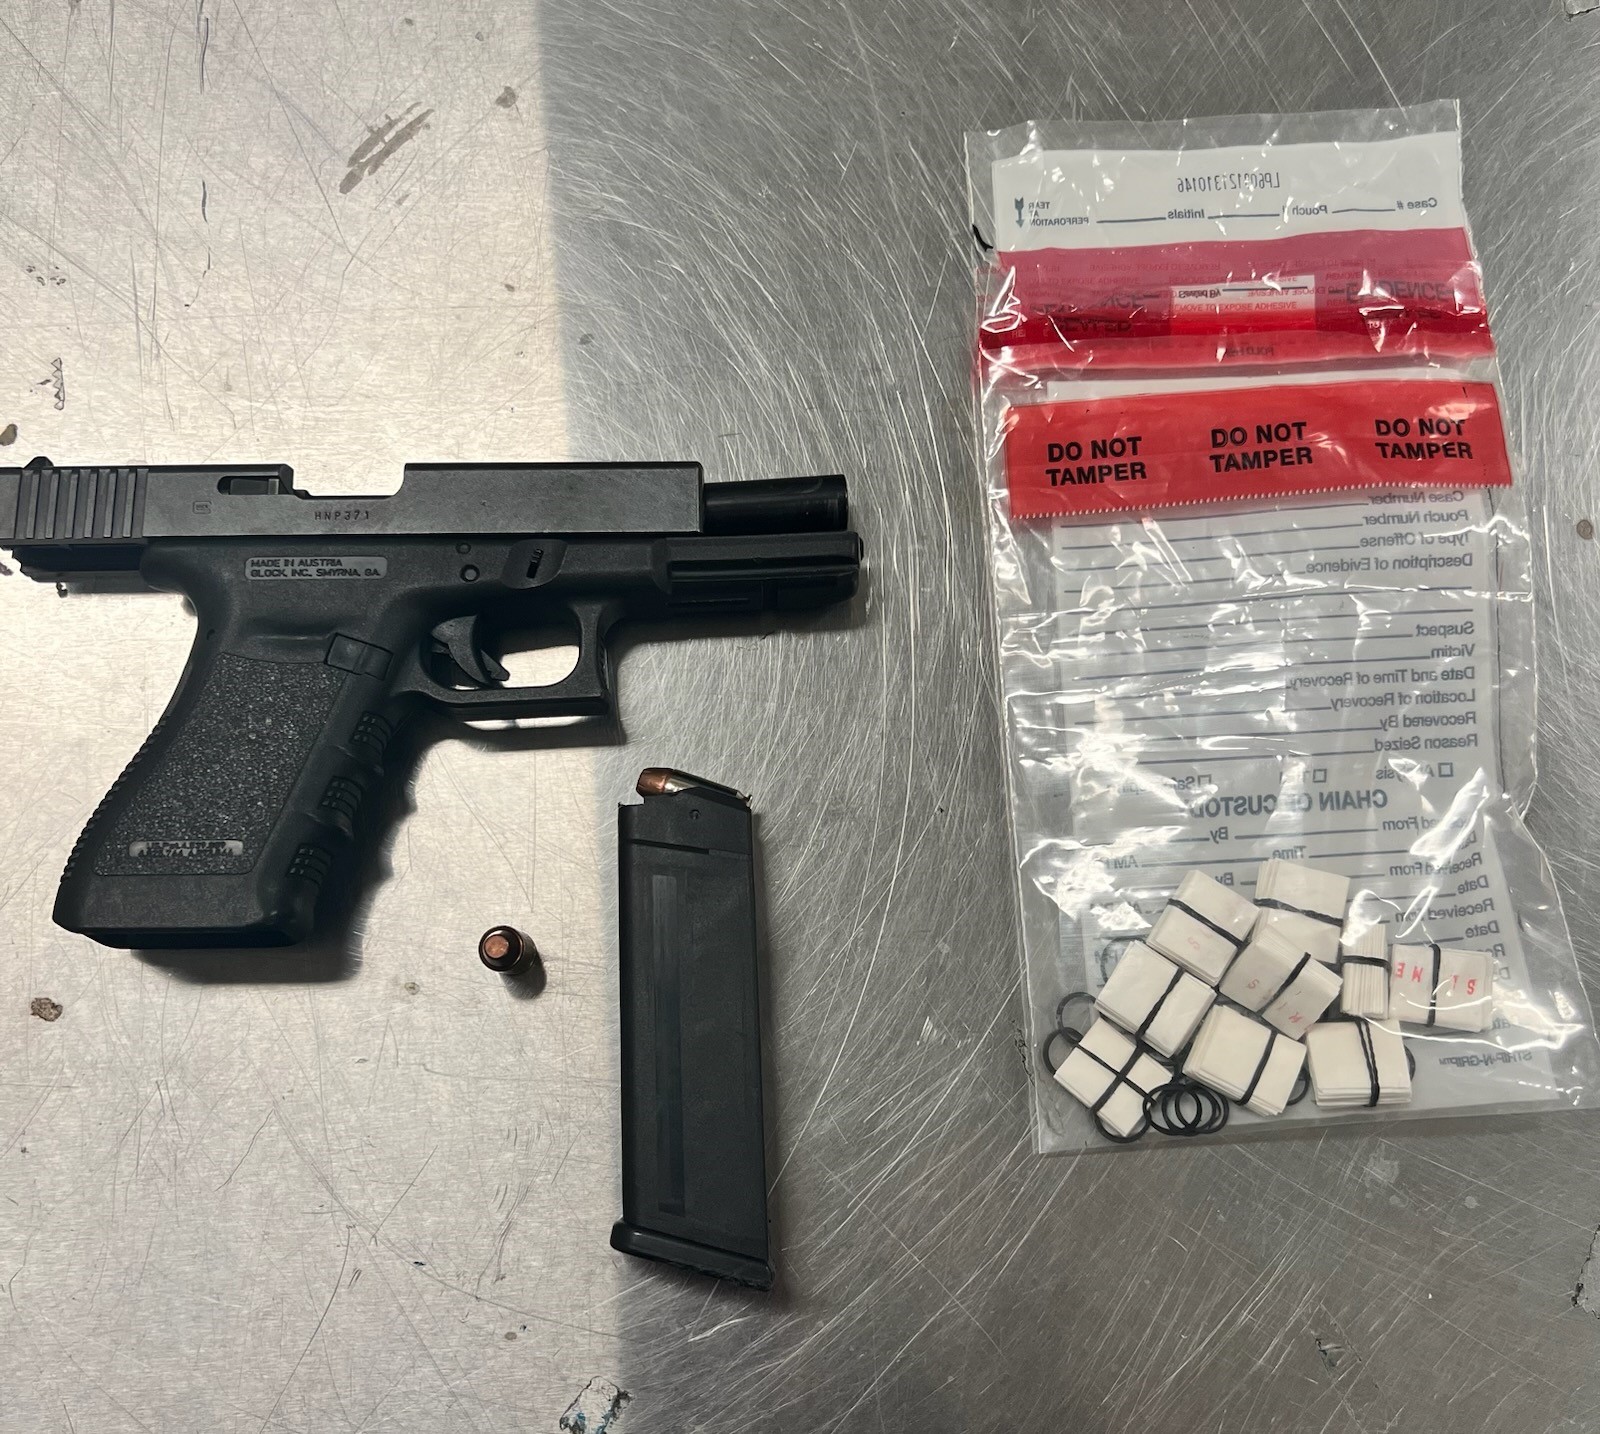 Glock handgun with heroin inside clear evidence bag on metal surface